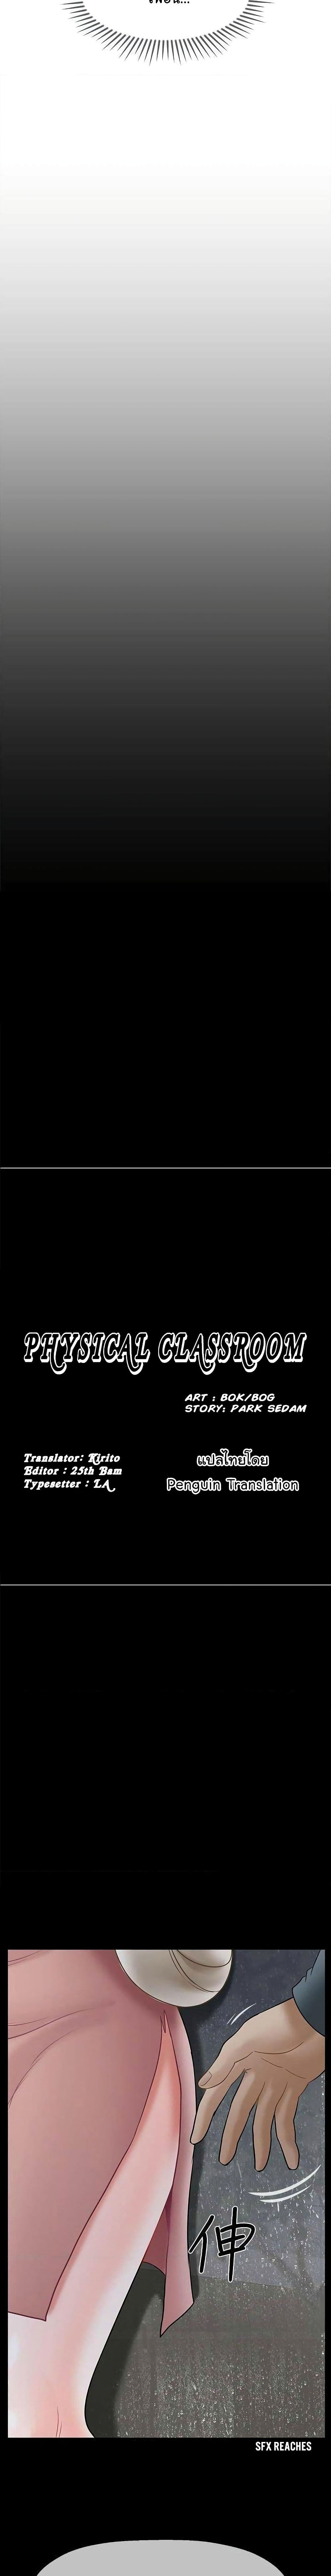 A Physical Classroom29 (12)